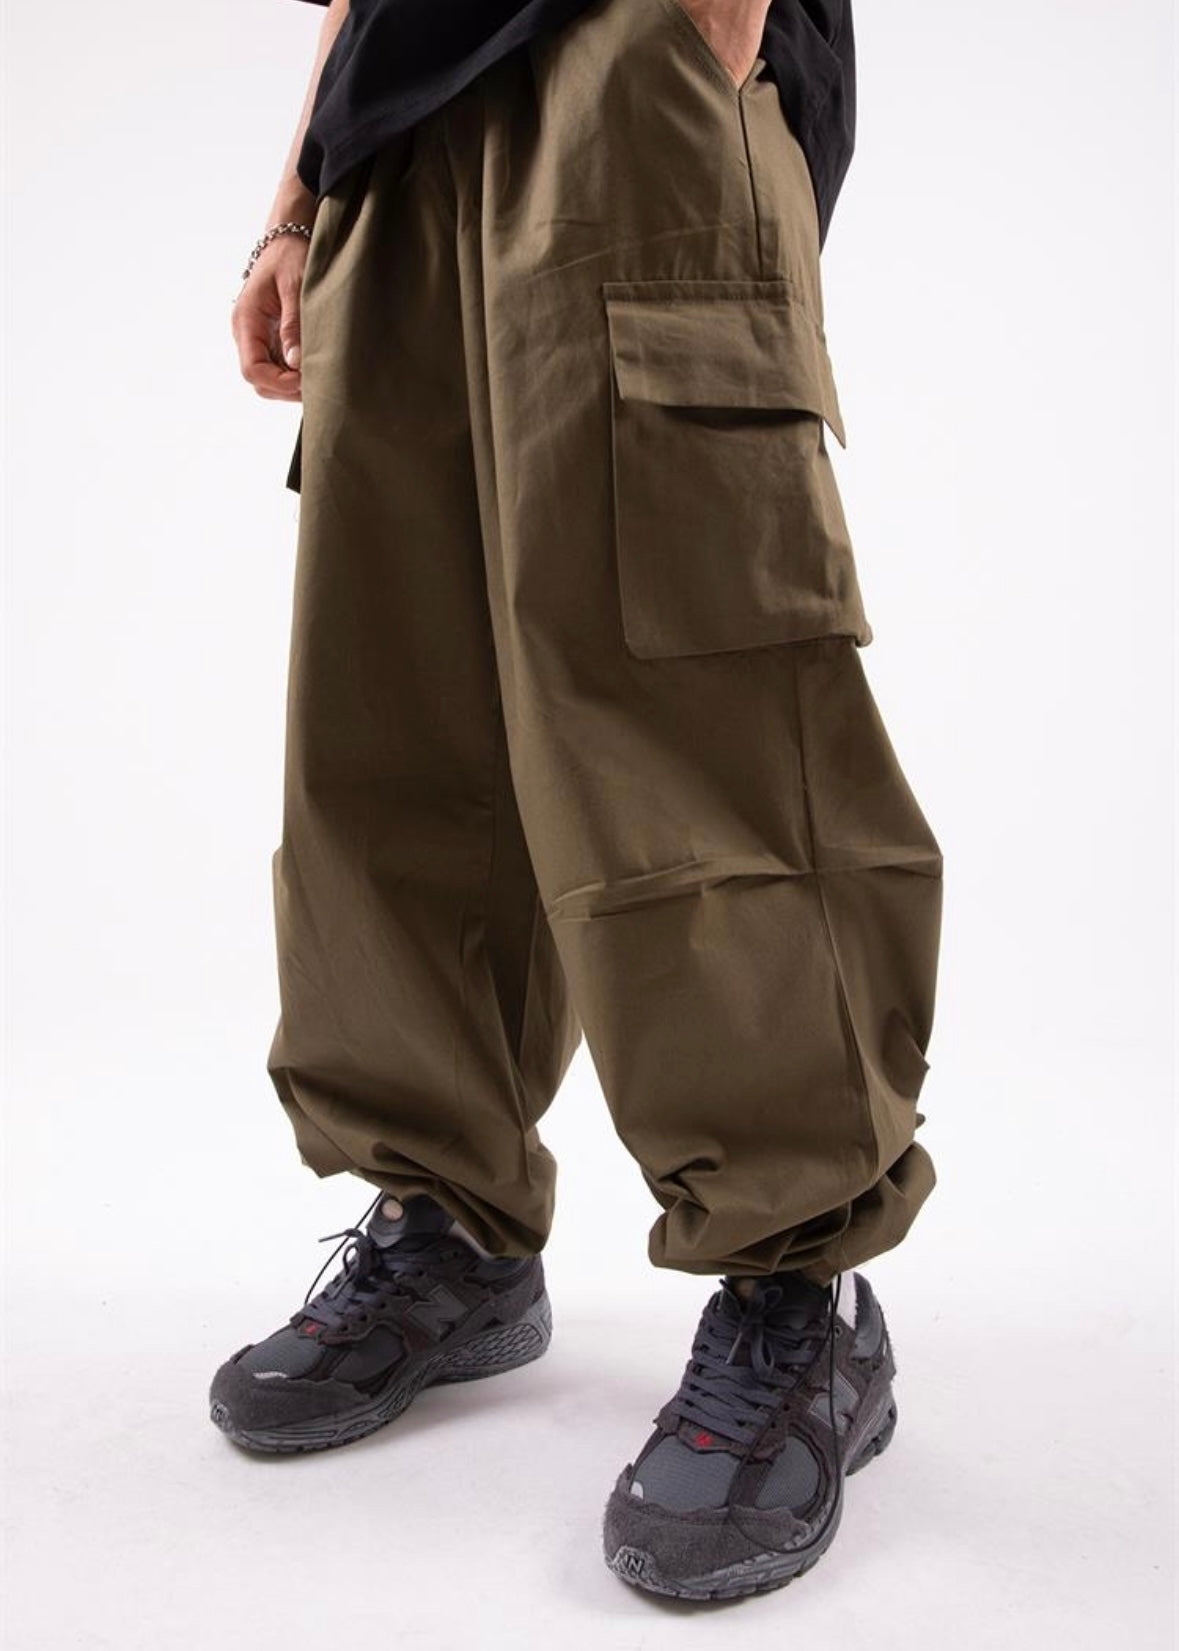 Adjustable khaki Pocket Pants - Clothing Lab